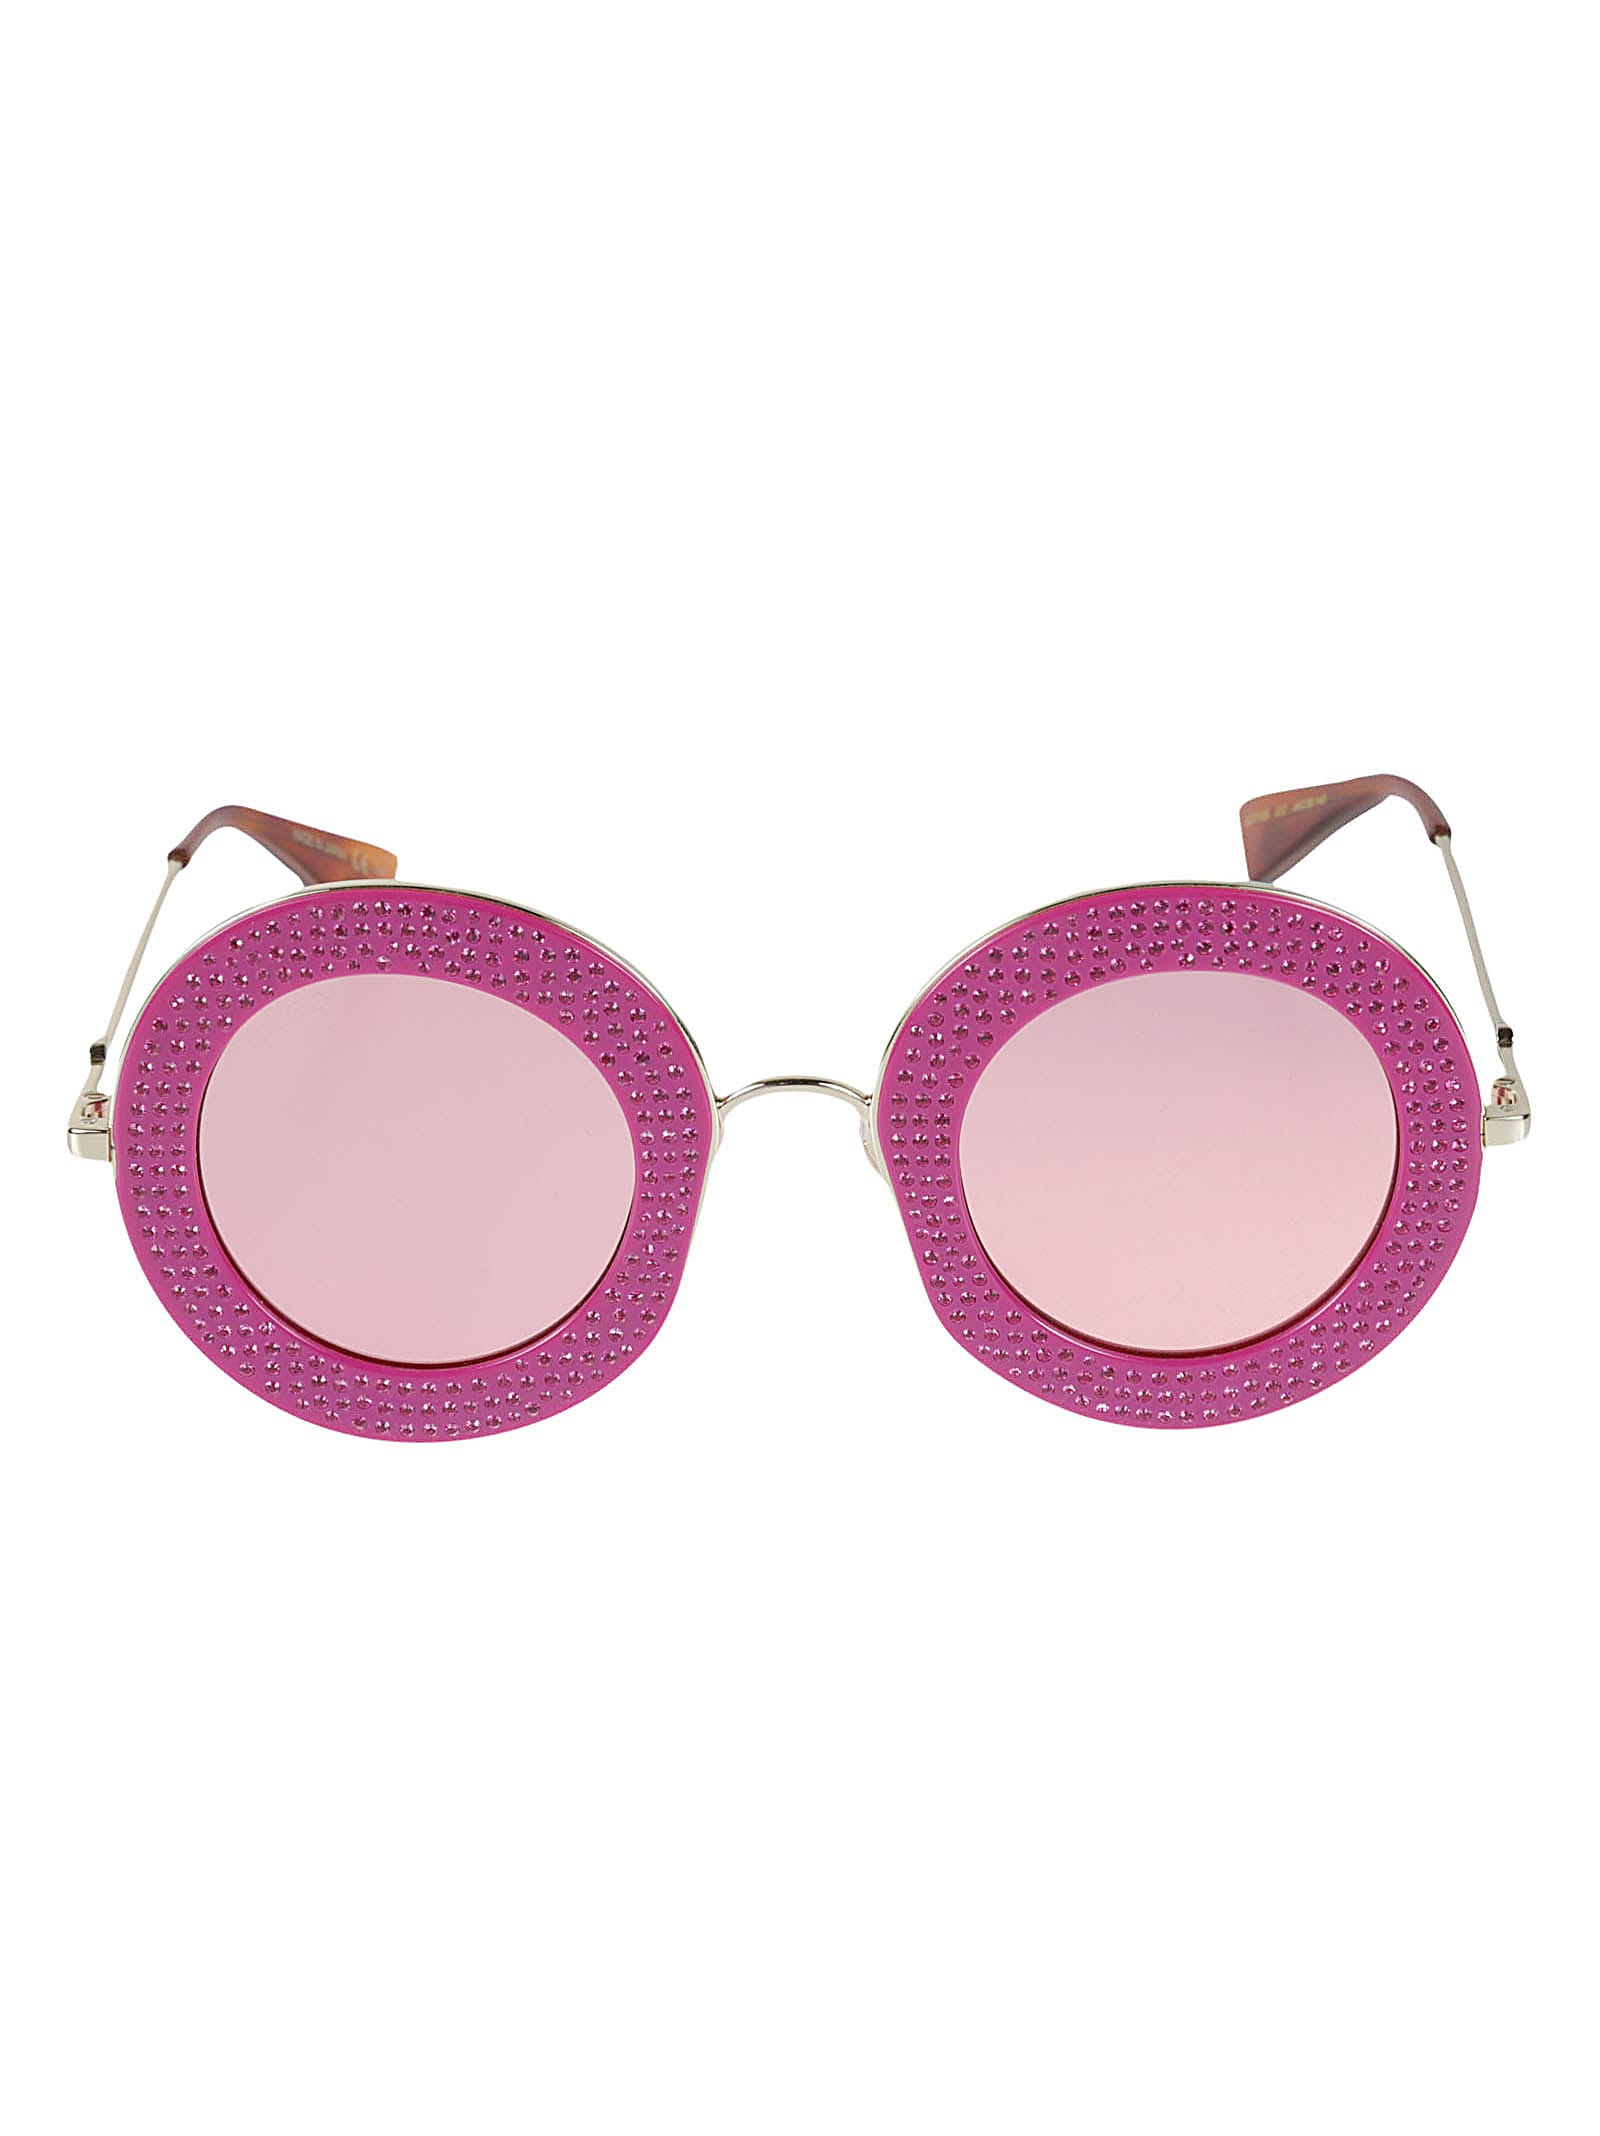 Gucci Embellished Round Sunglasses